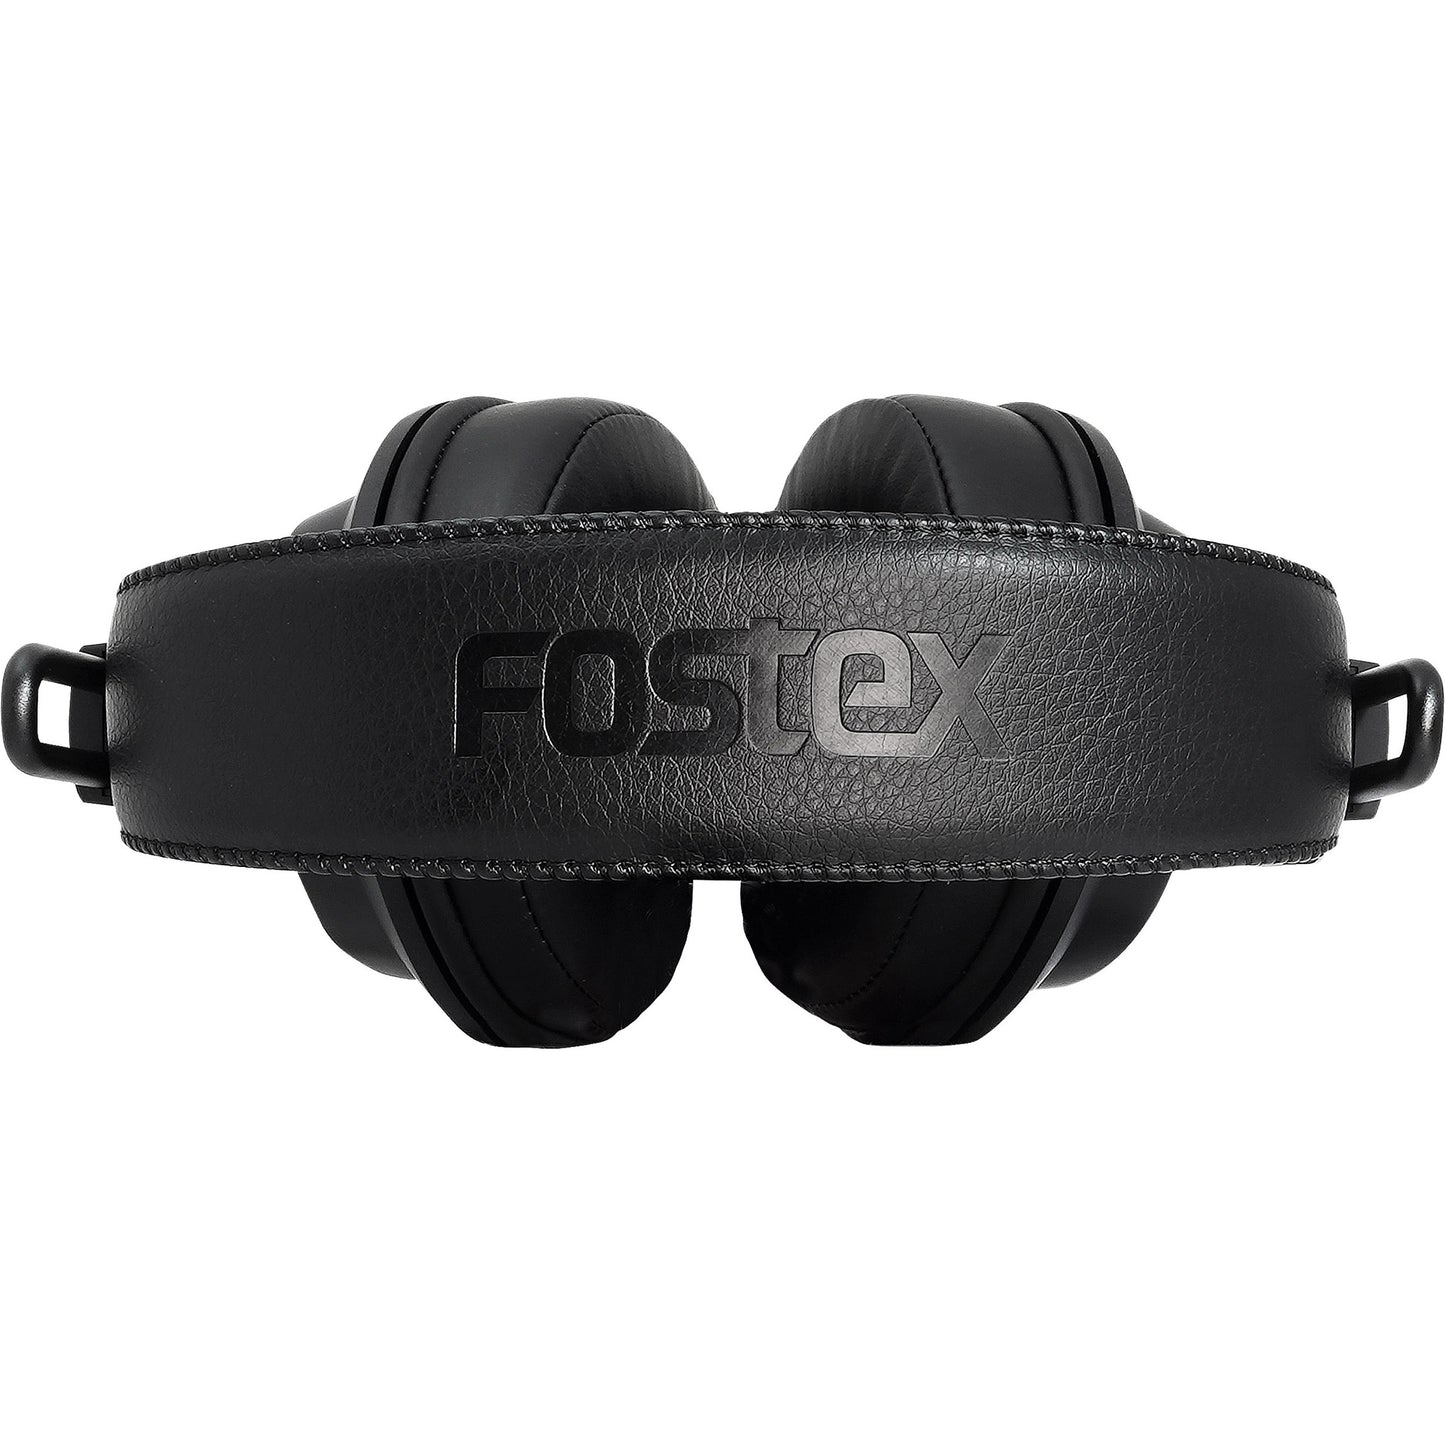 Fostex T50RPmk4 Headphones